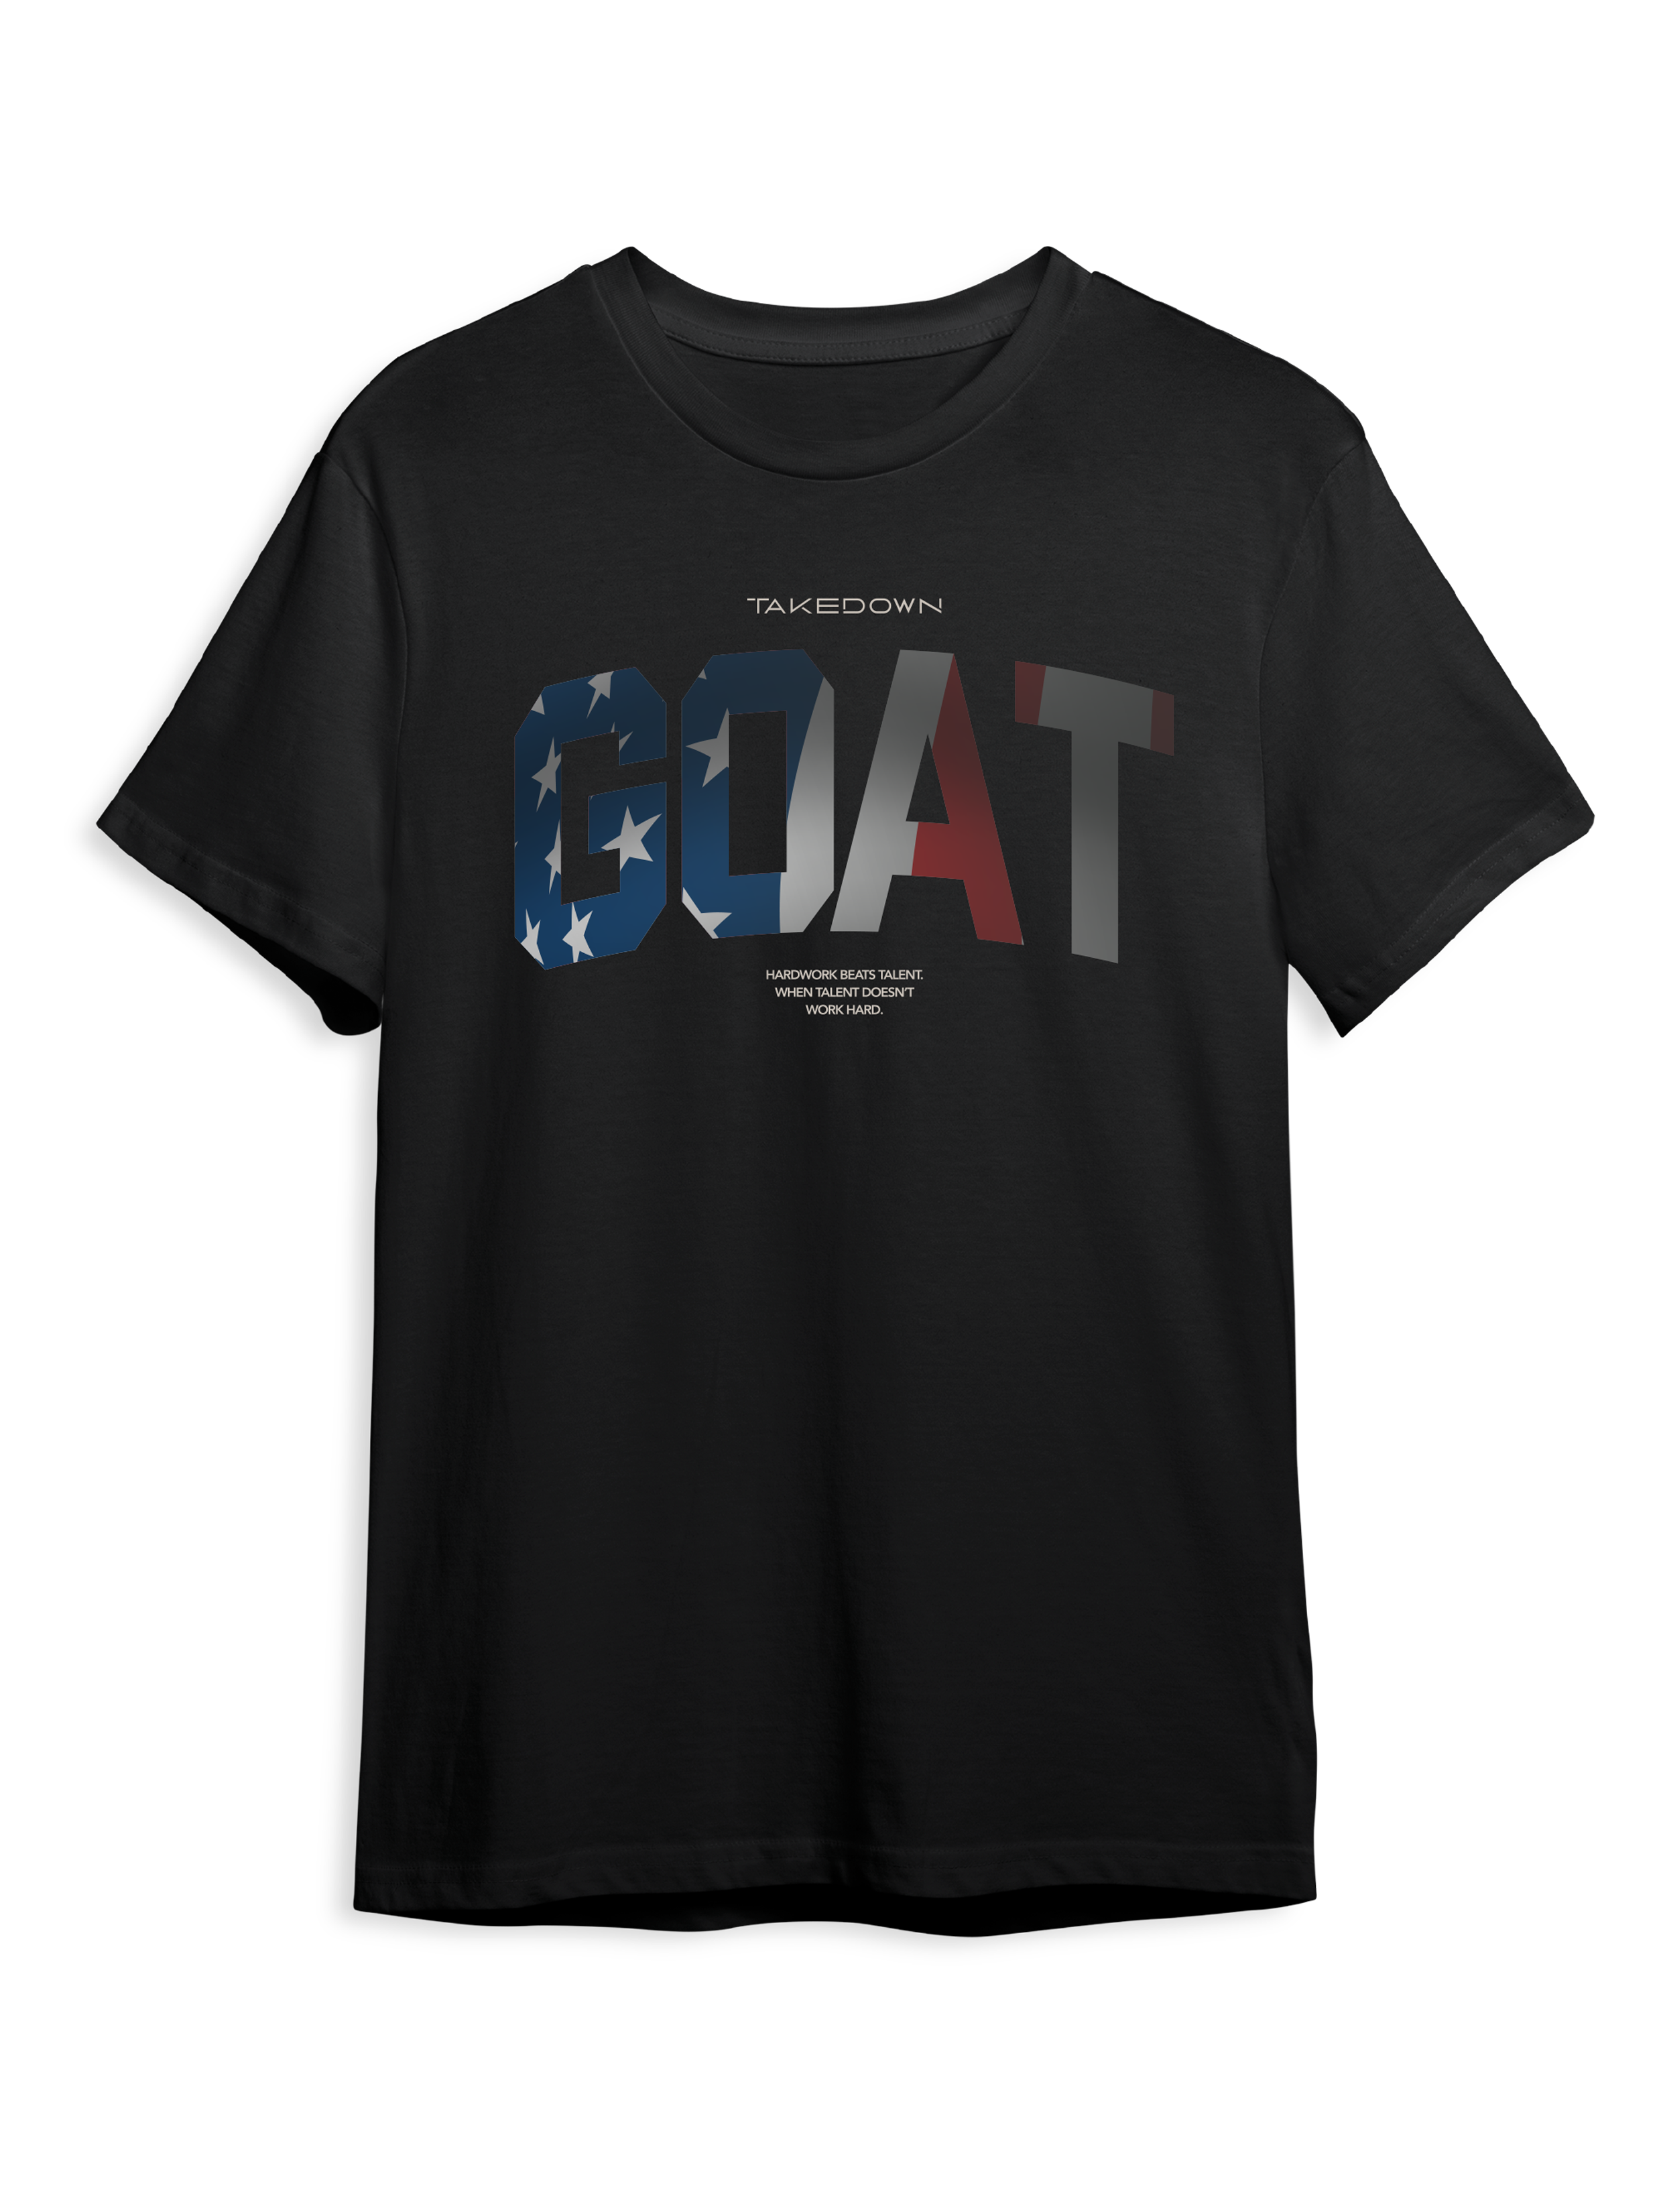 USA GOAT Graphic T-Shirt